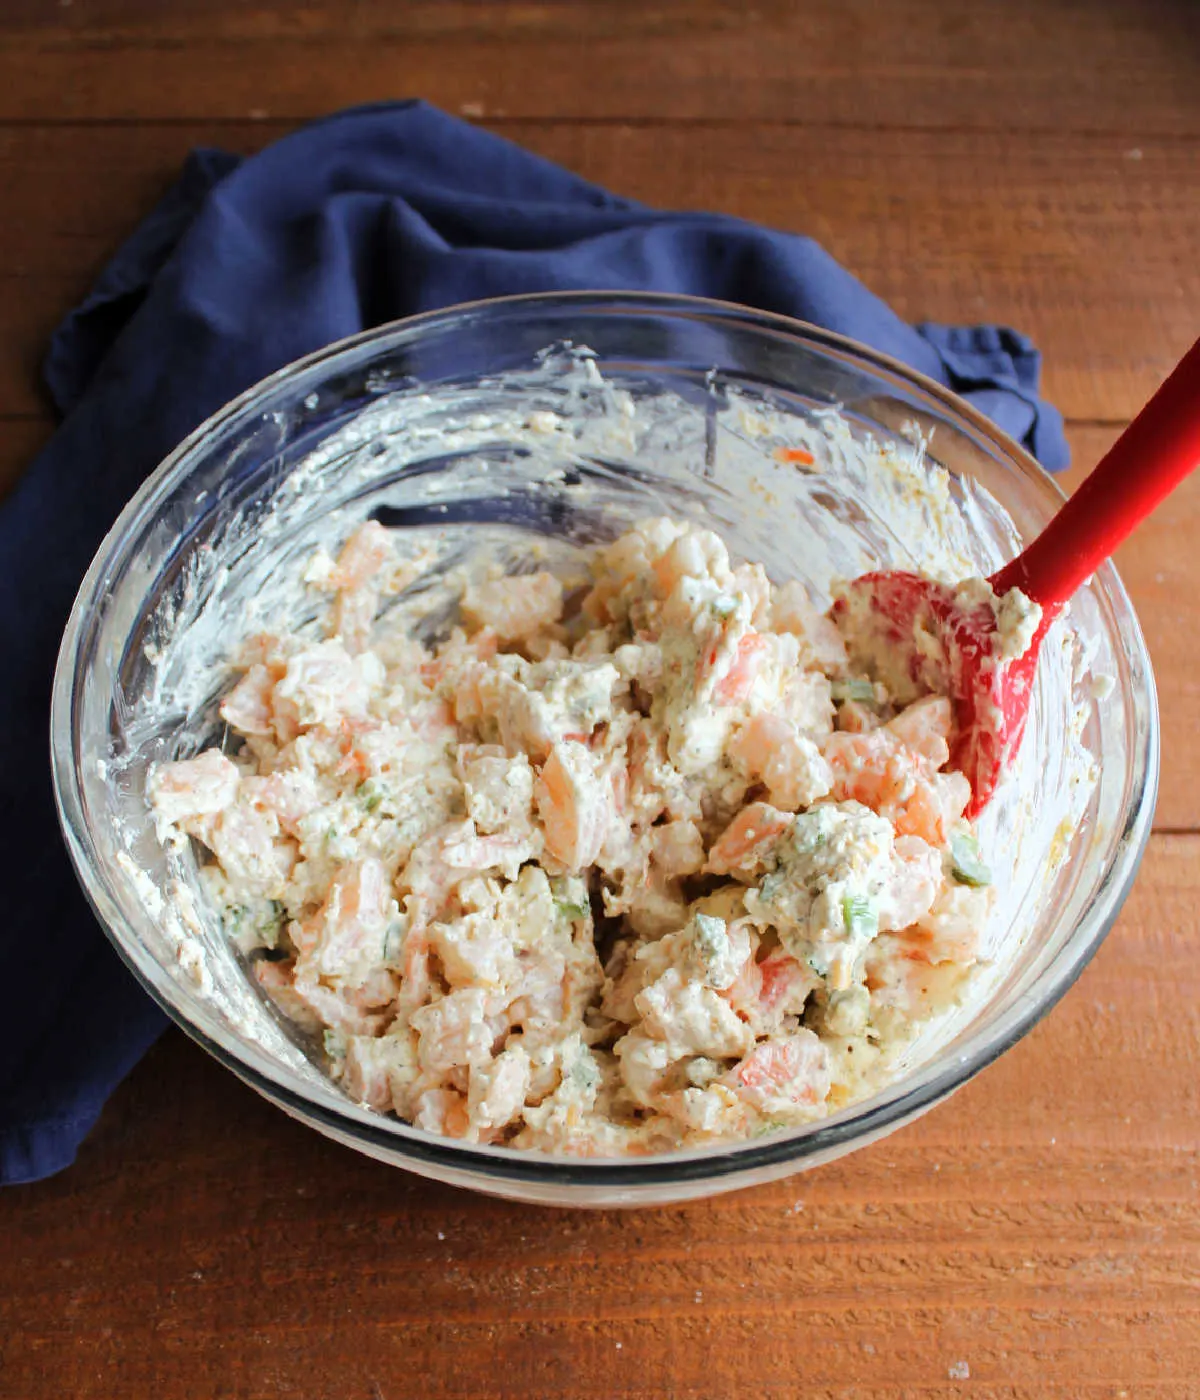 Mixing bowl of cajun shrimp dip showing the high ratio of shrimp to cream cheese mixture.